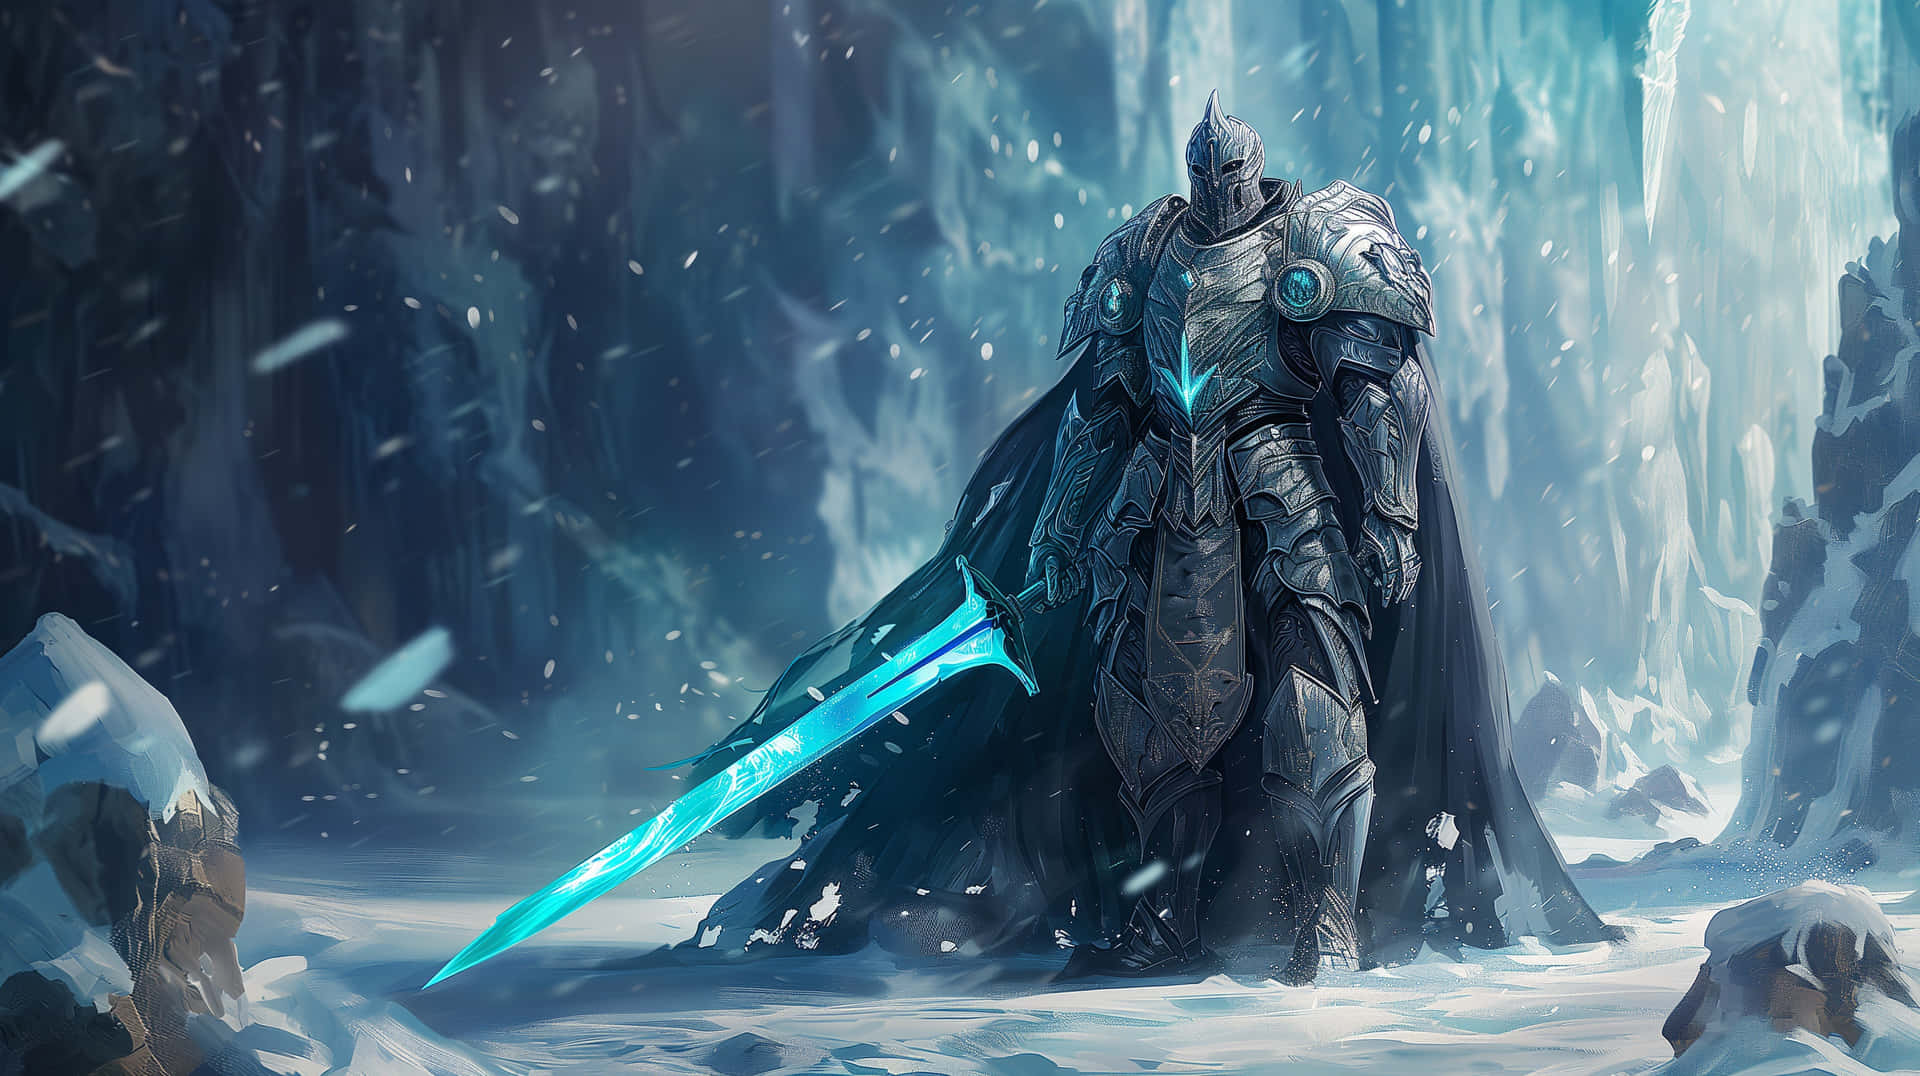 Frozen_ Warrior_in_ Icy_ Realm Wallpaper